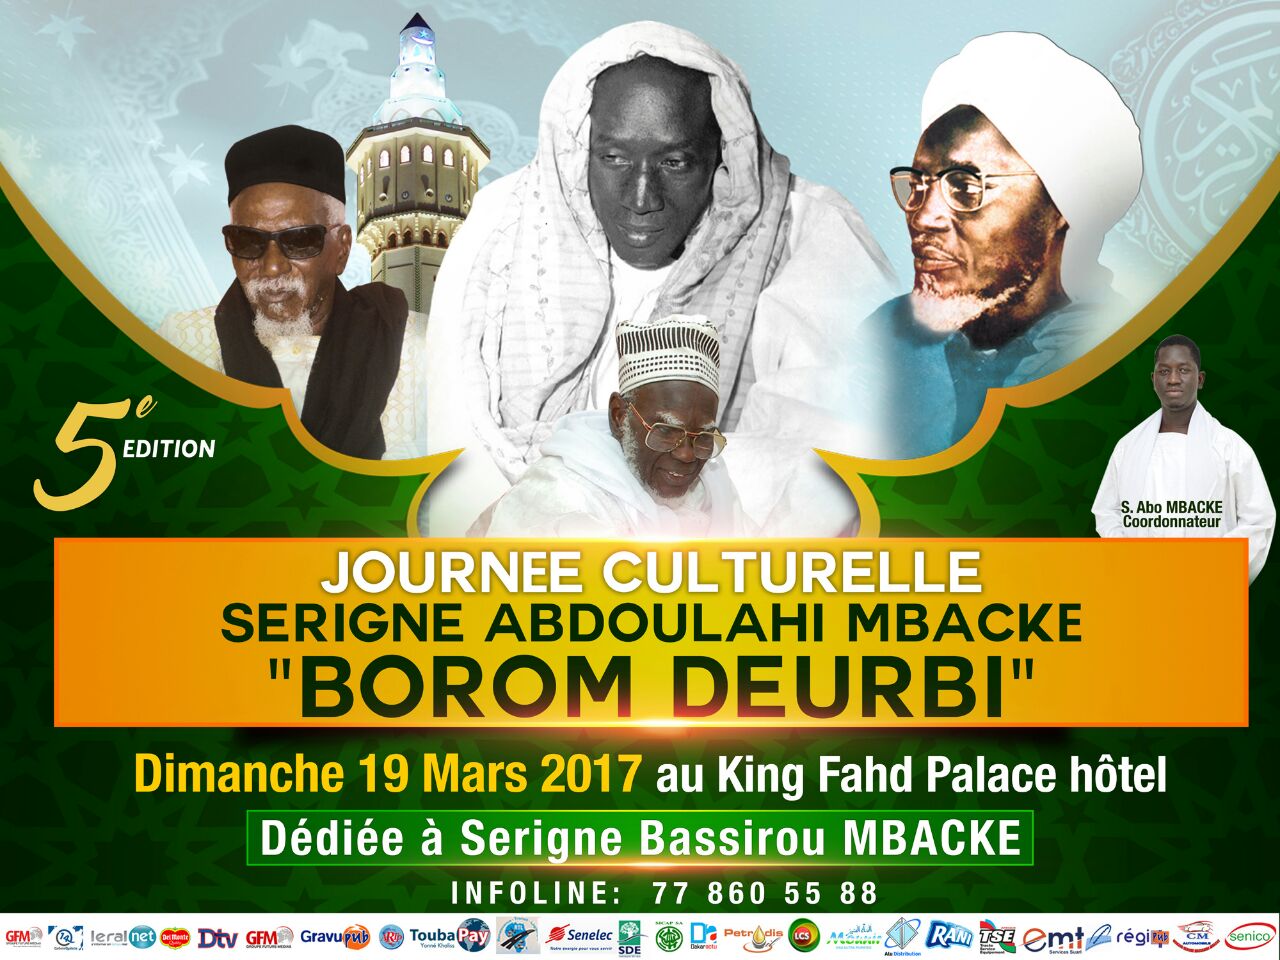 Journées culturelles Serigne Abdoullahi Mbacké: Dakar célébre « Borom Deurbi » le 19 Mars au King Fahd Palace